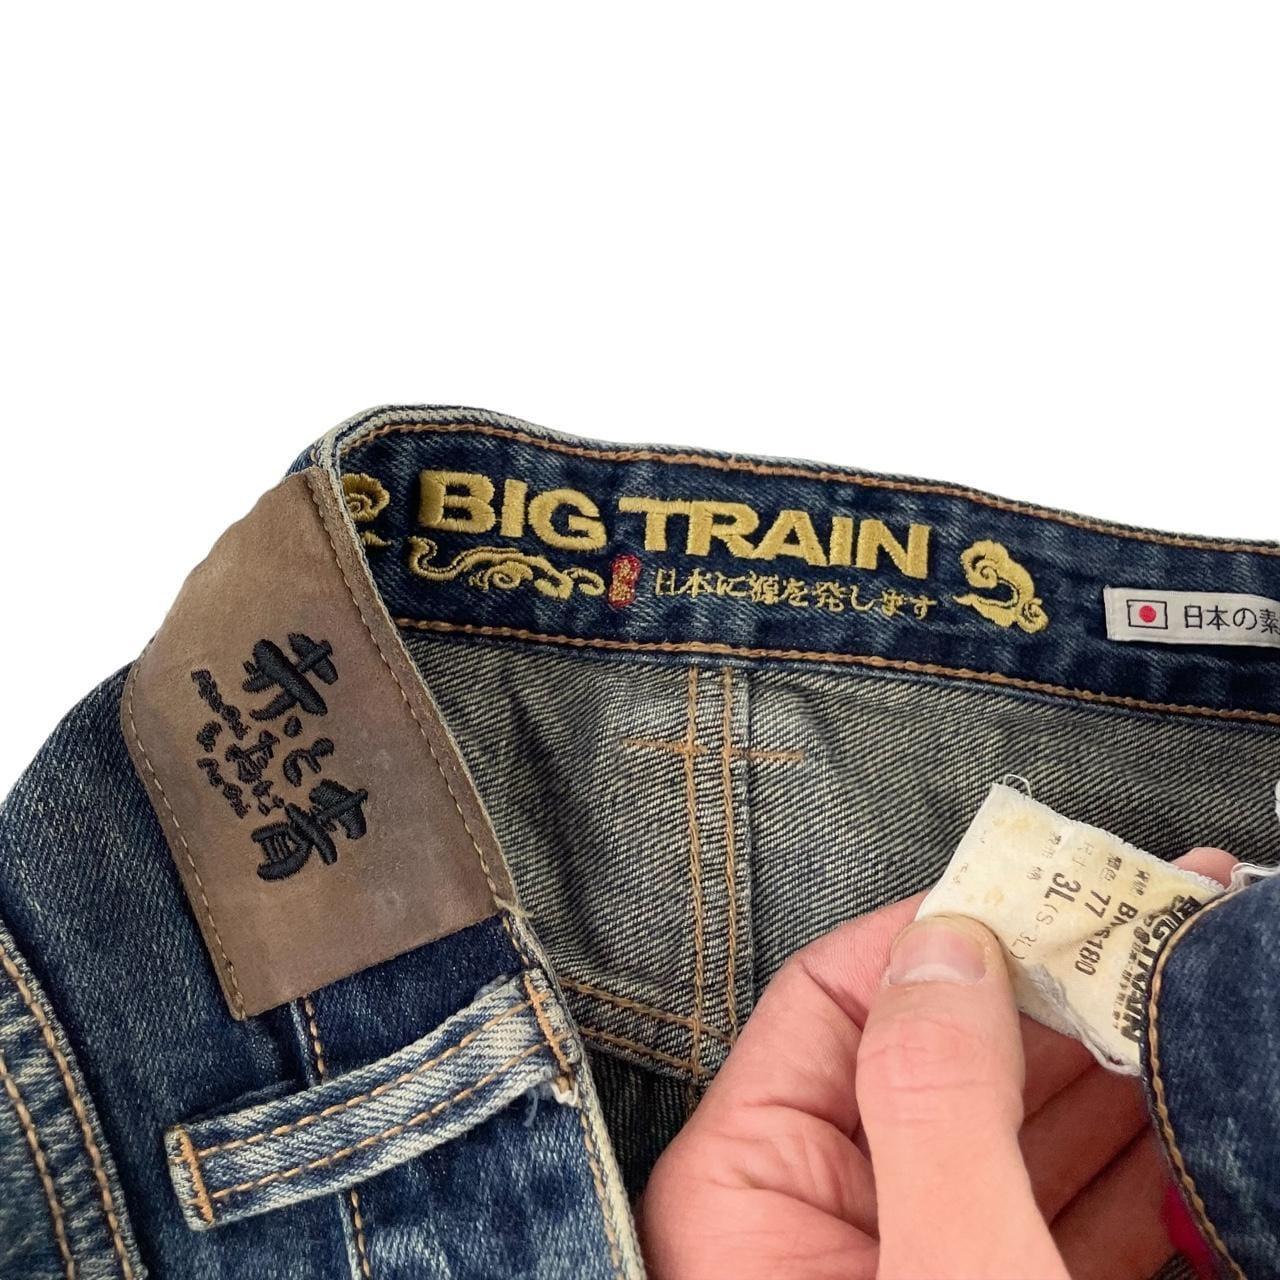 Vintage Big train Japanese denim jeans shorts W36 - Known Source